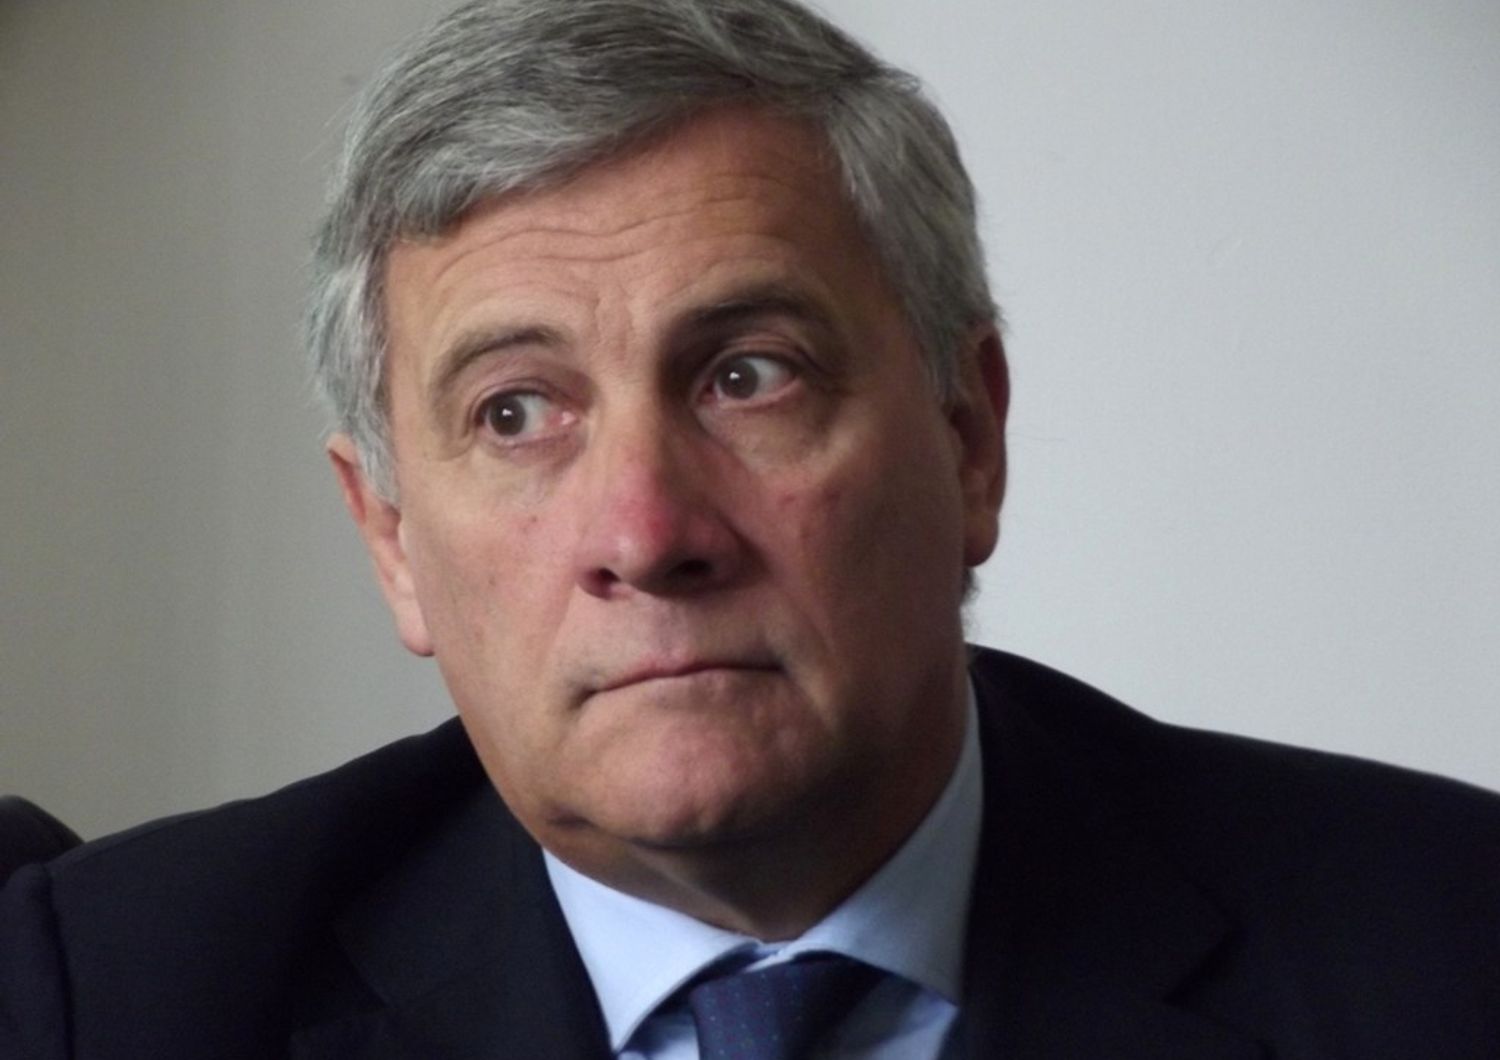 &nbsp;Antonio Tajani